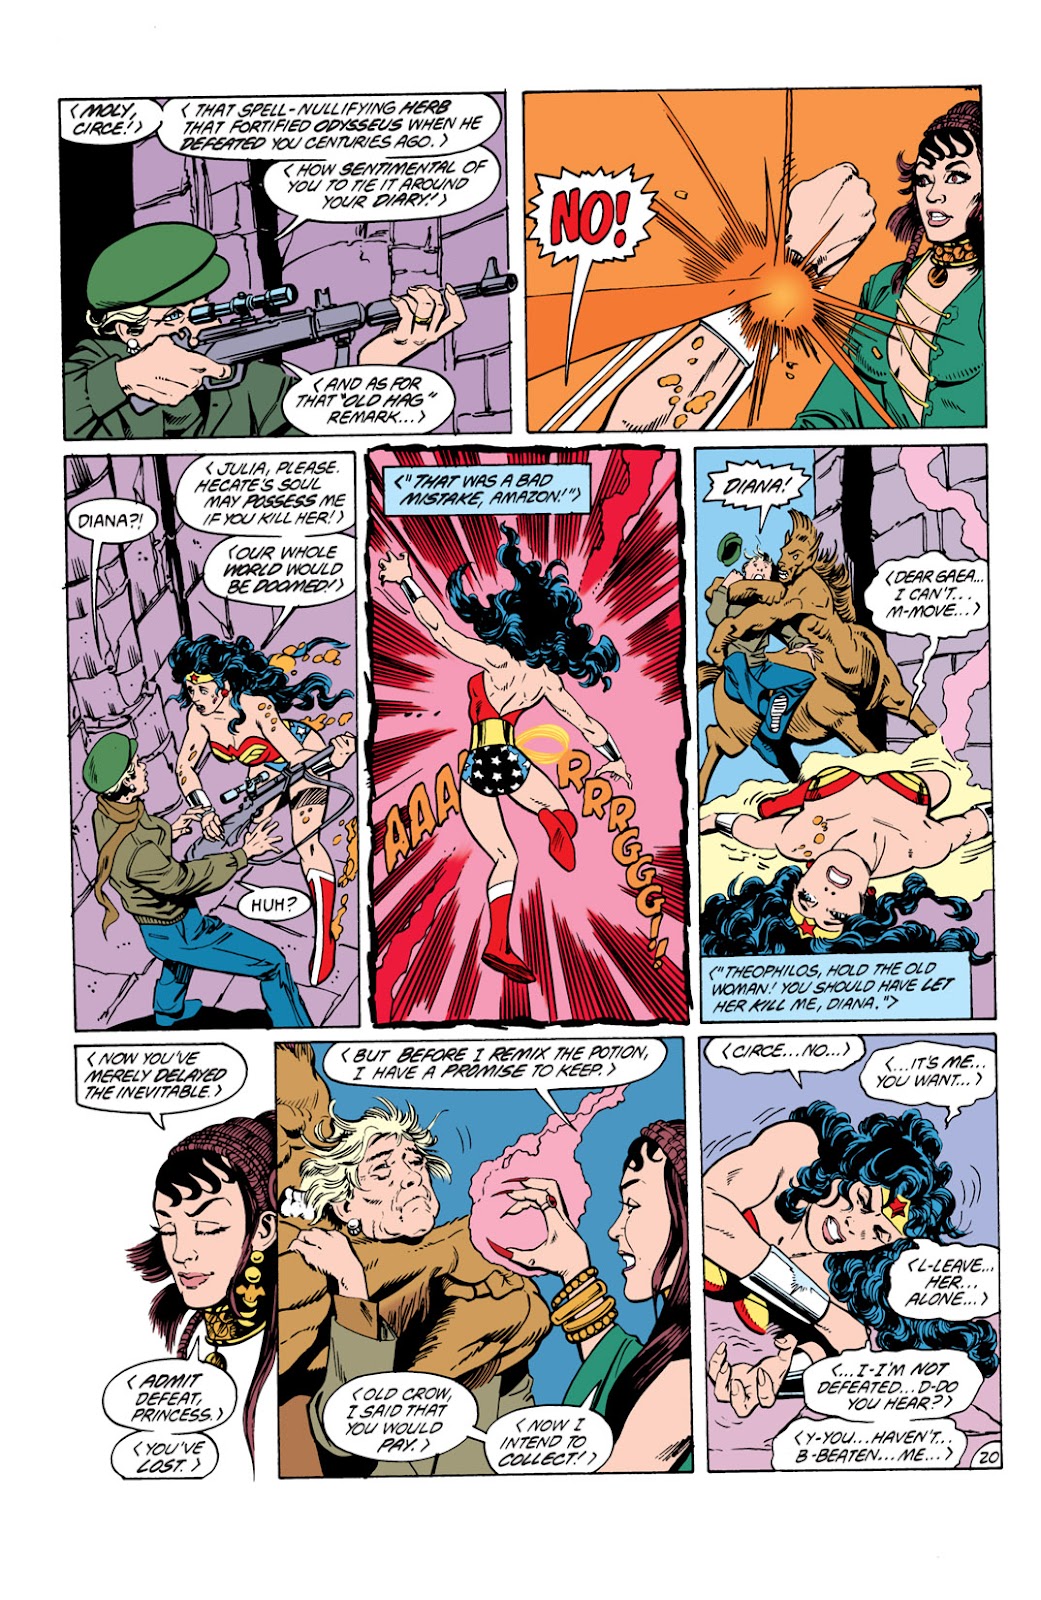 Wonder Woman (Comic Book) - TV Tropes